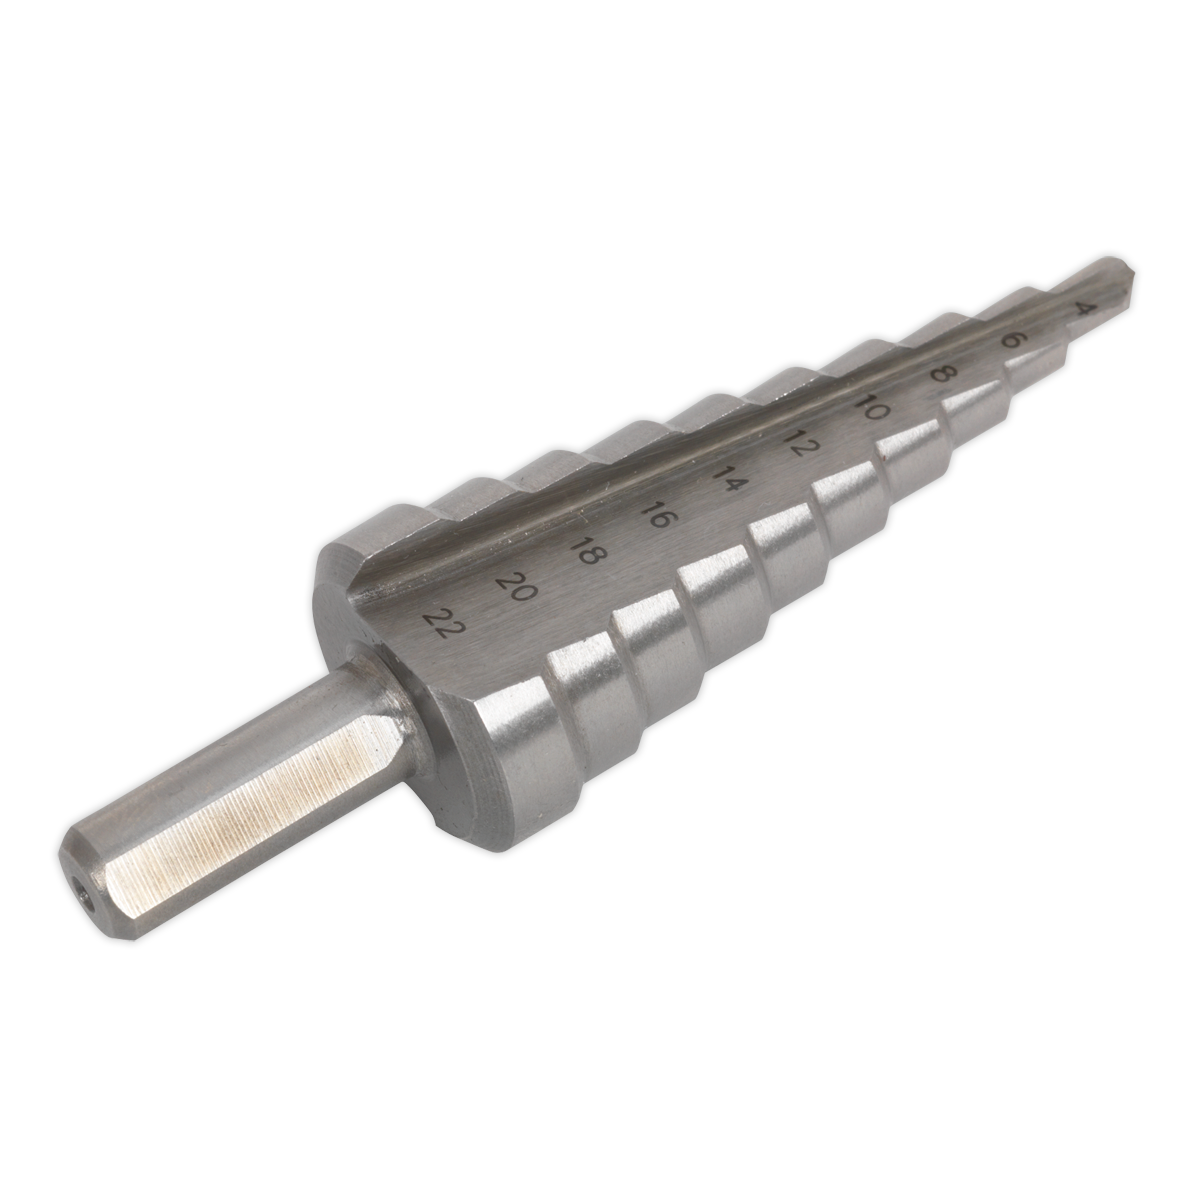 Sealey HSS 4341 Step Drill Bit 4-22mm Double Flute